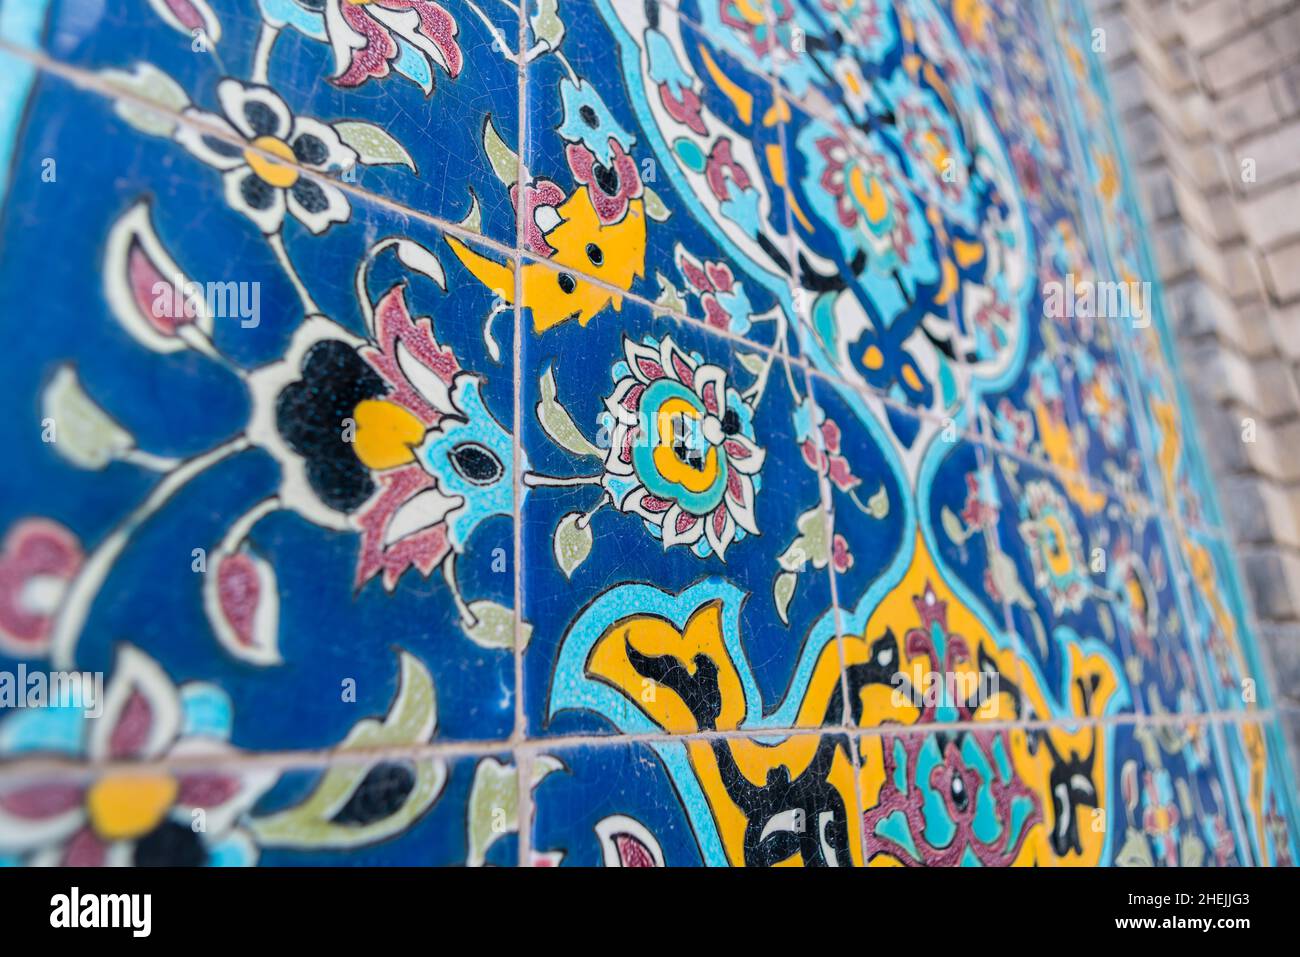 Farbenfrohe dekorative Kacheln an einer Wand in Teheran, Iran Stockfoto